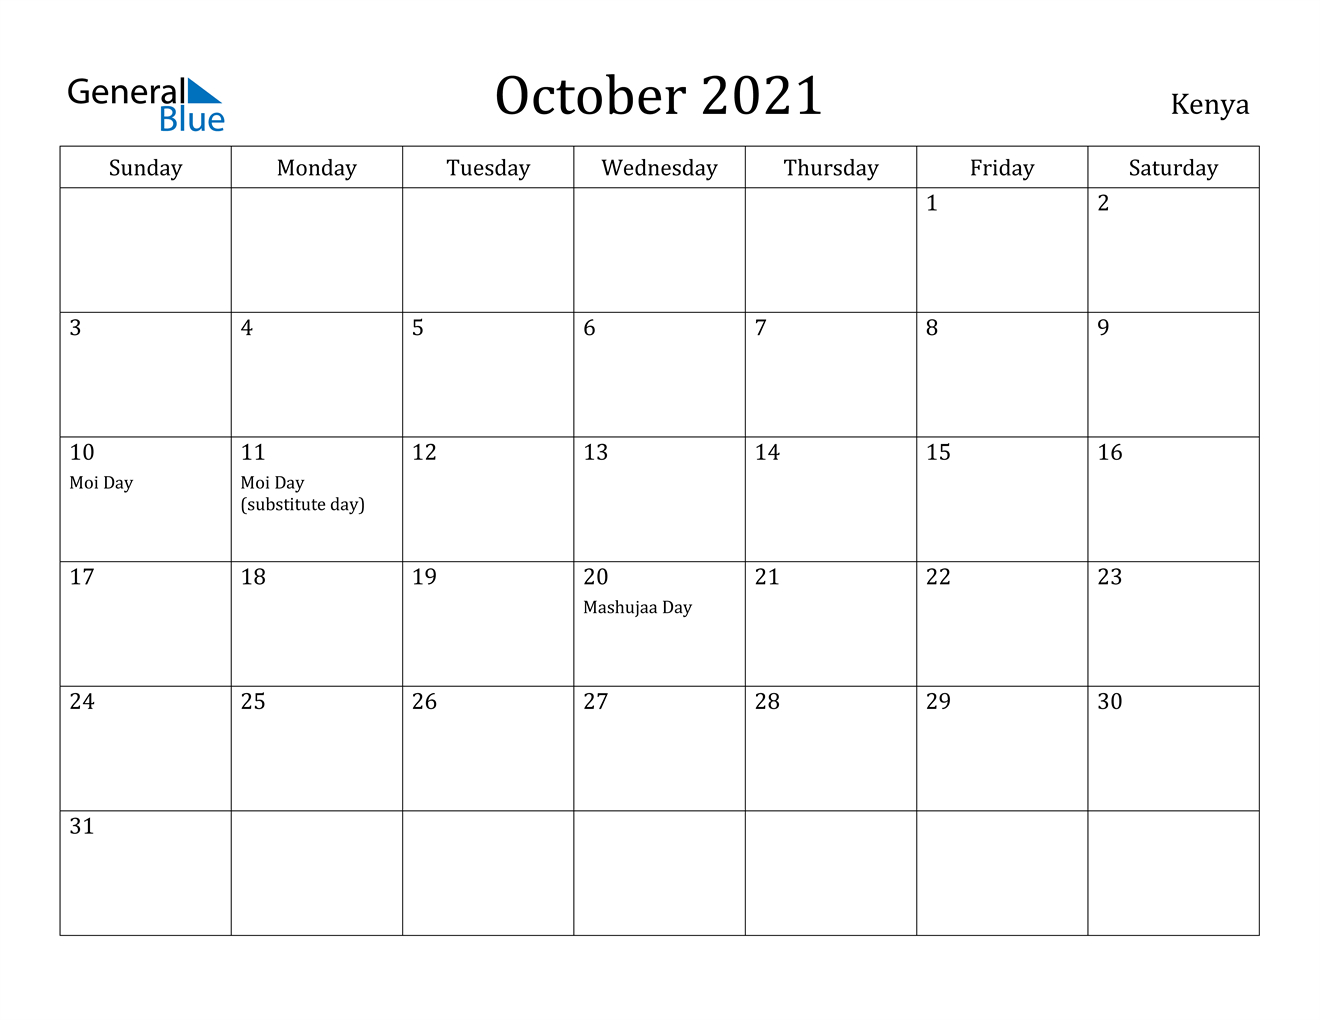 October 2021 Calendar - Kenya